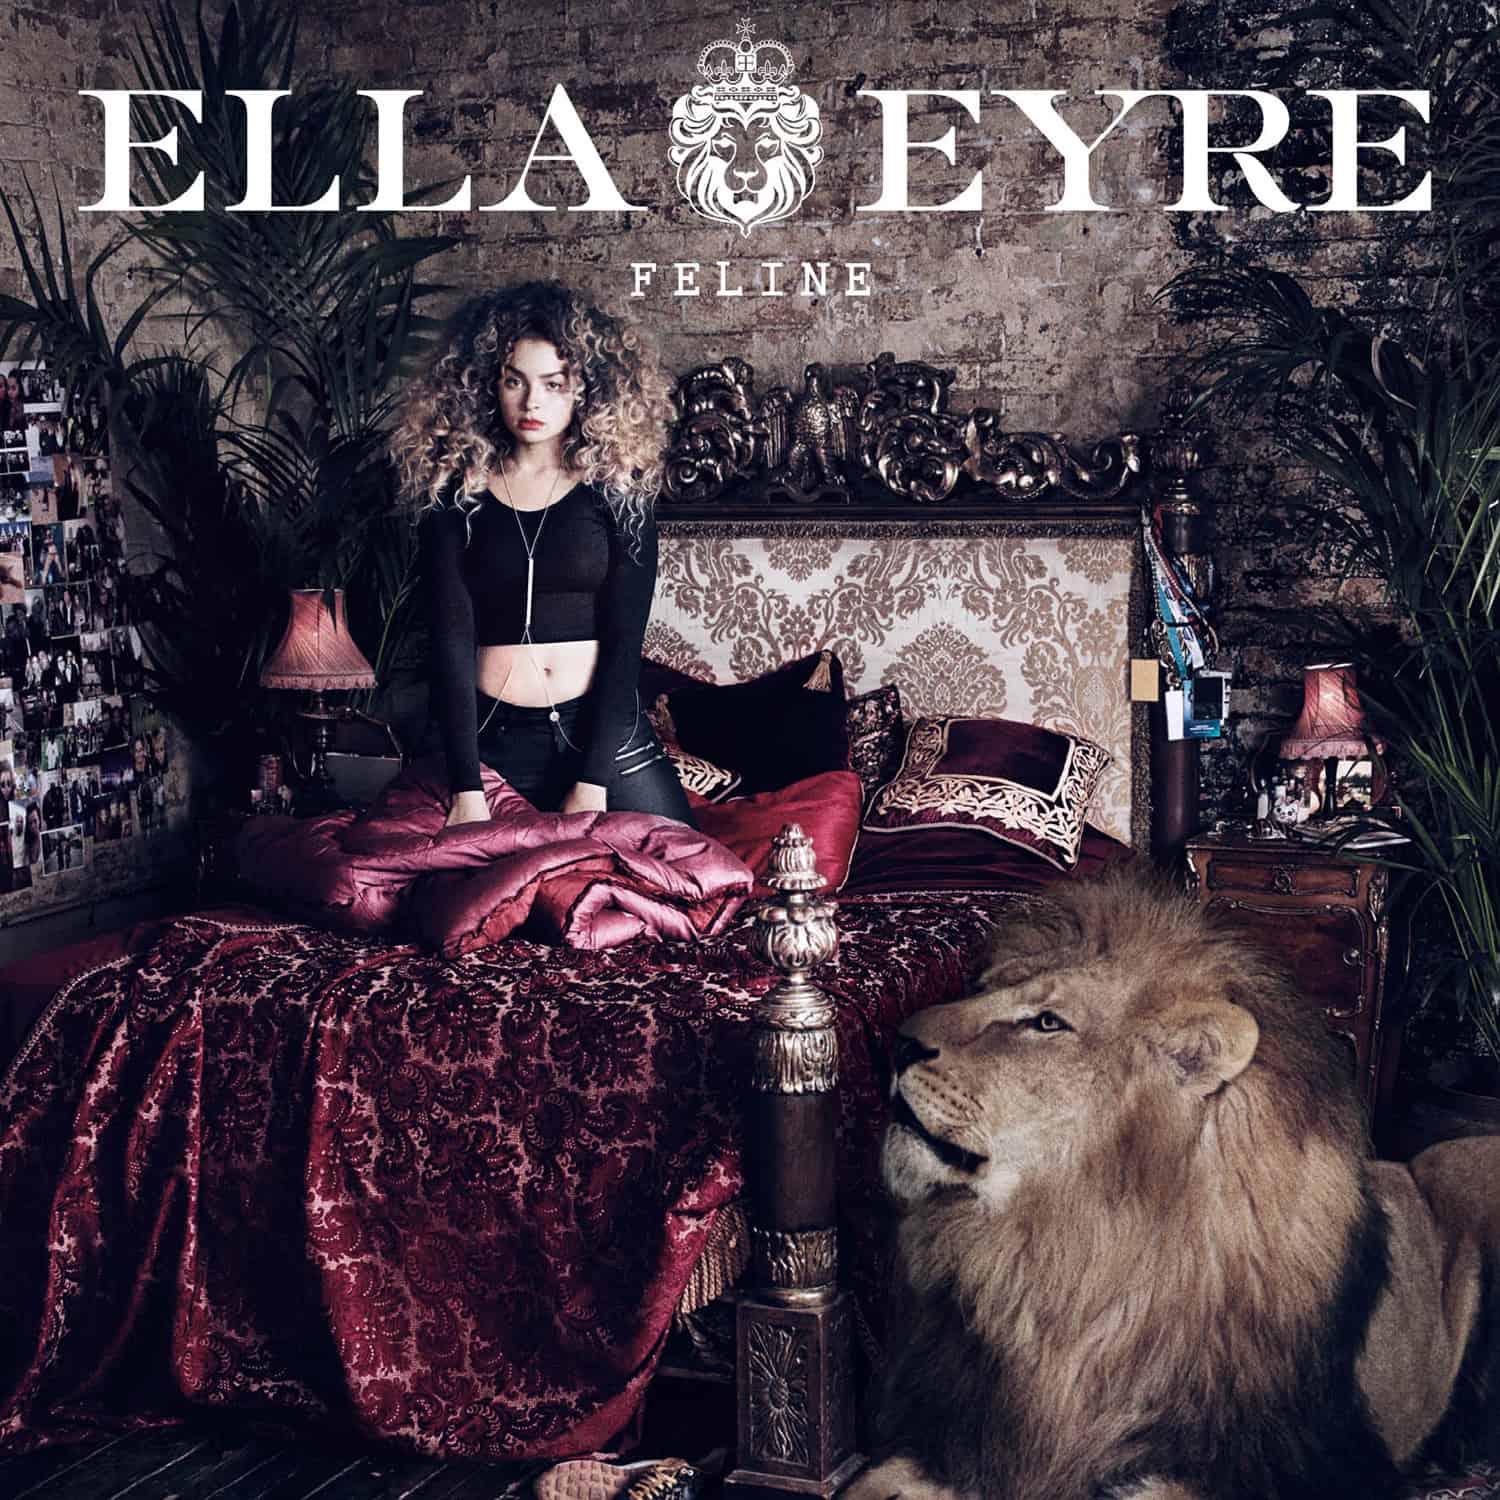 Ella Eyre: Premiera albumu Feline już 14 sierpnia!